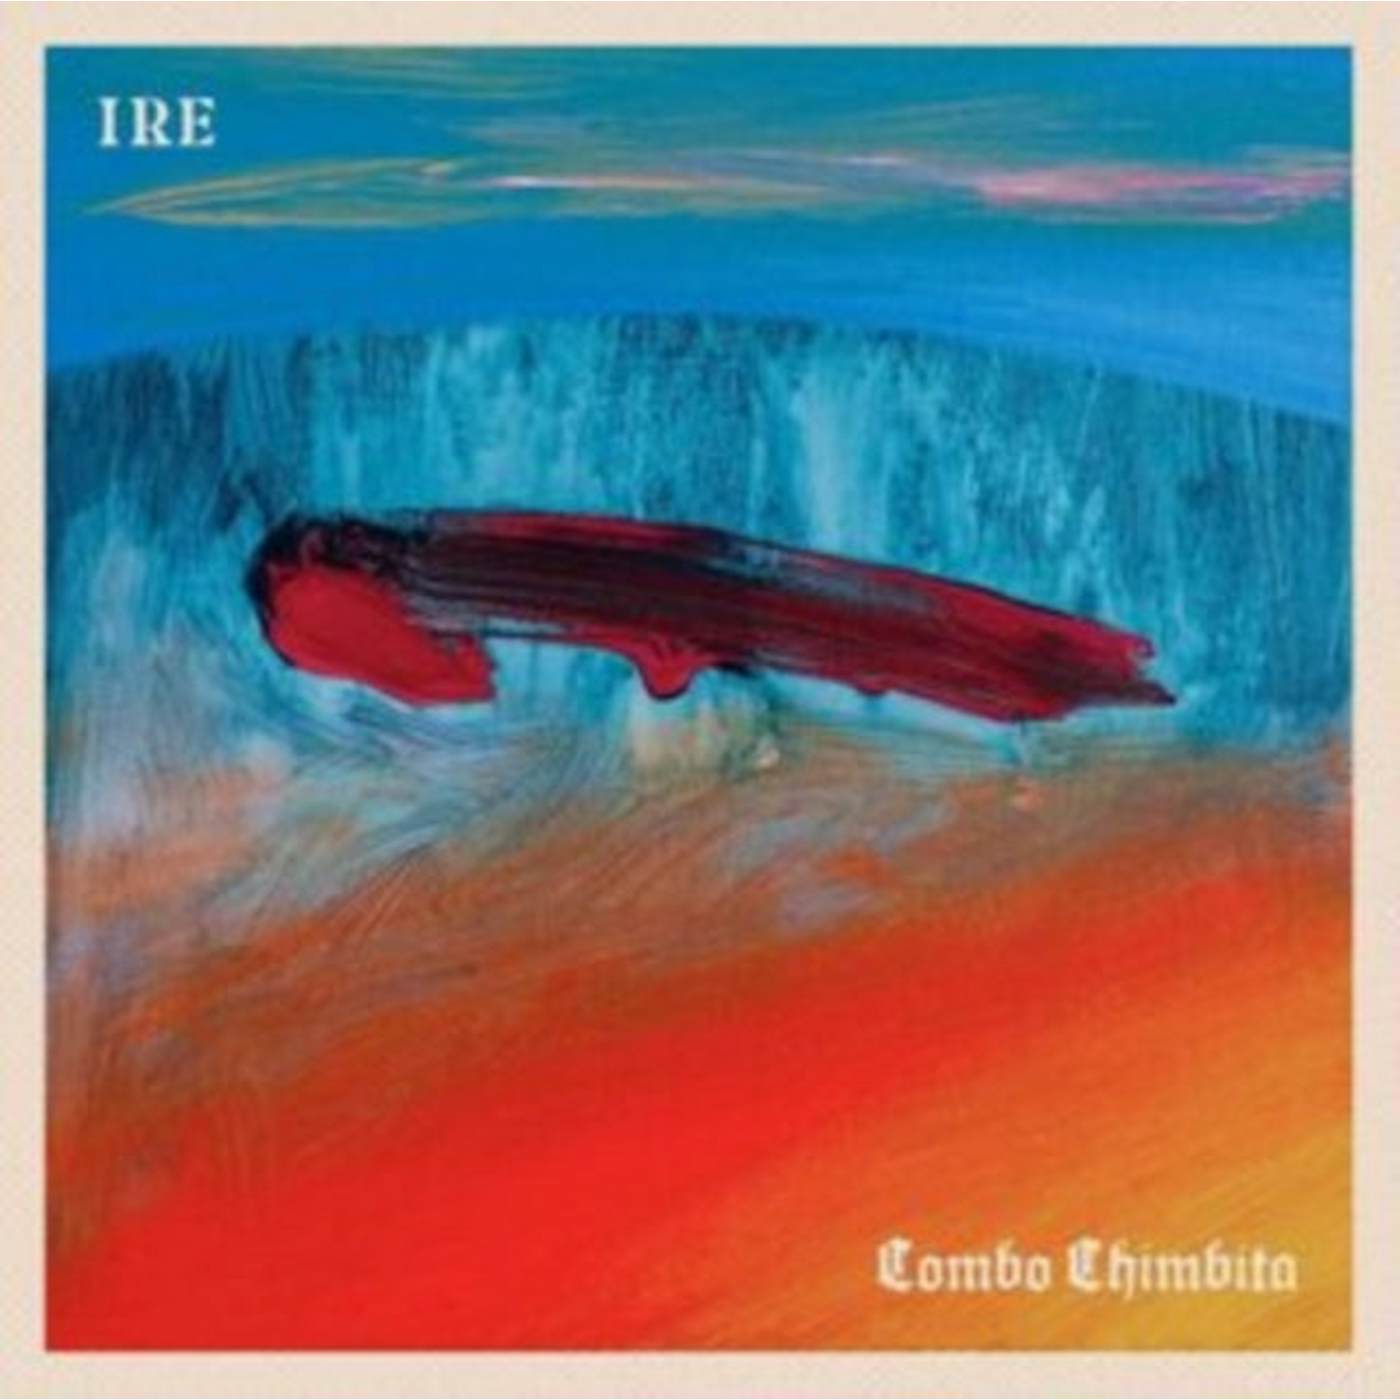 Combo Chimbita LP - Ire (Vinyl)